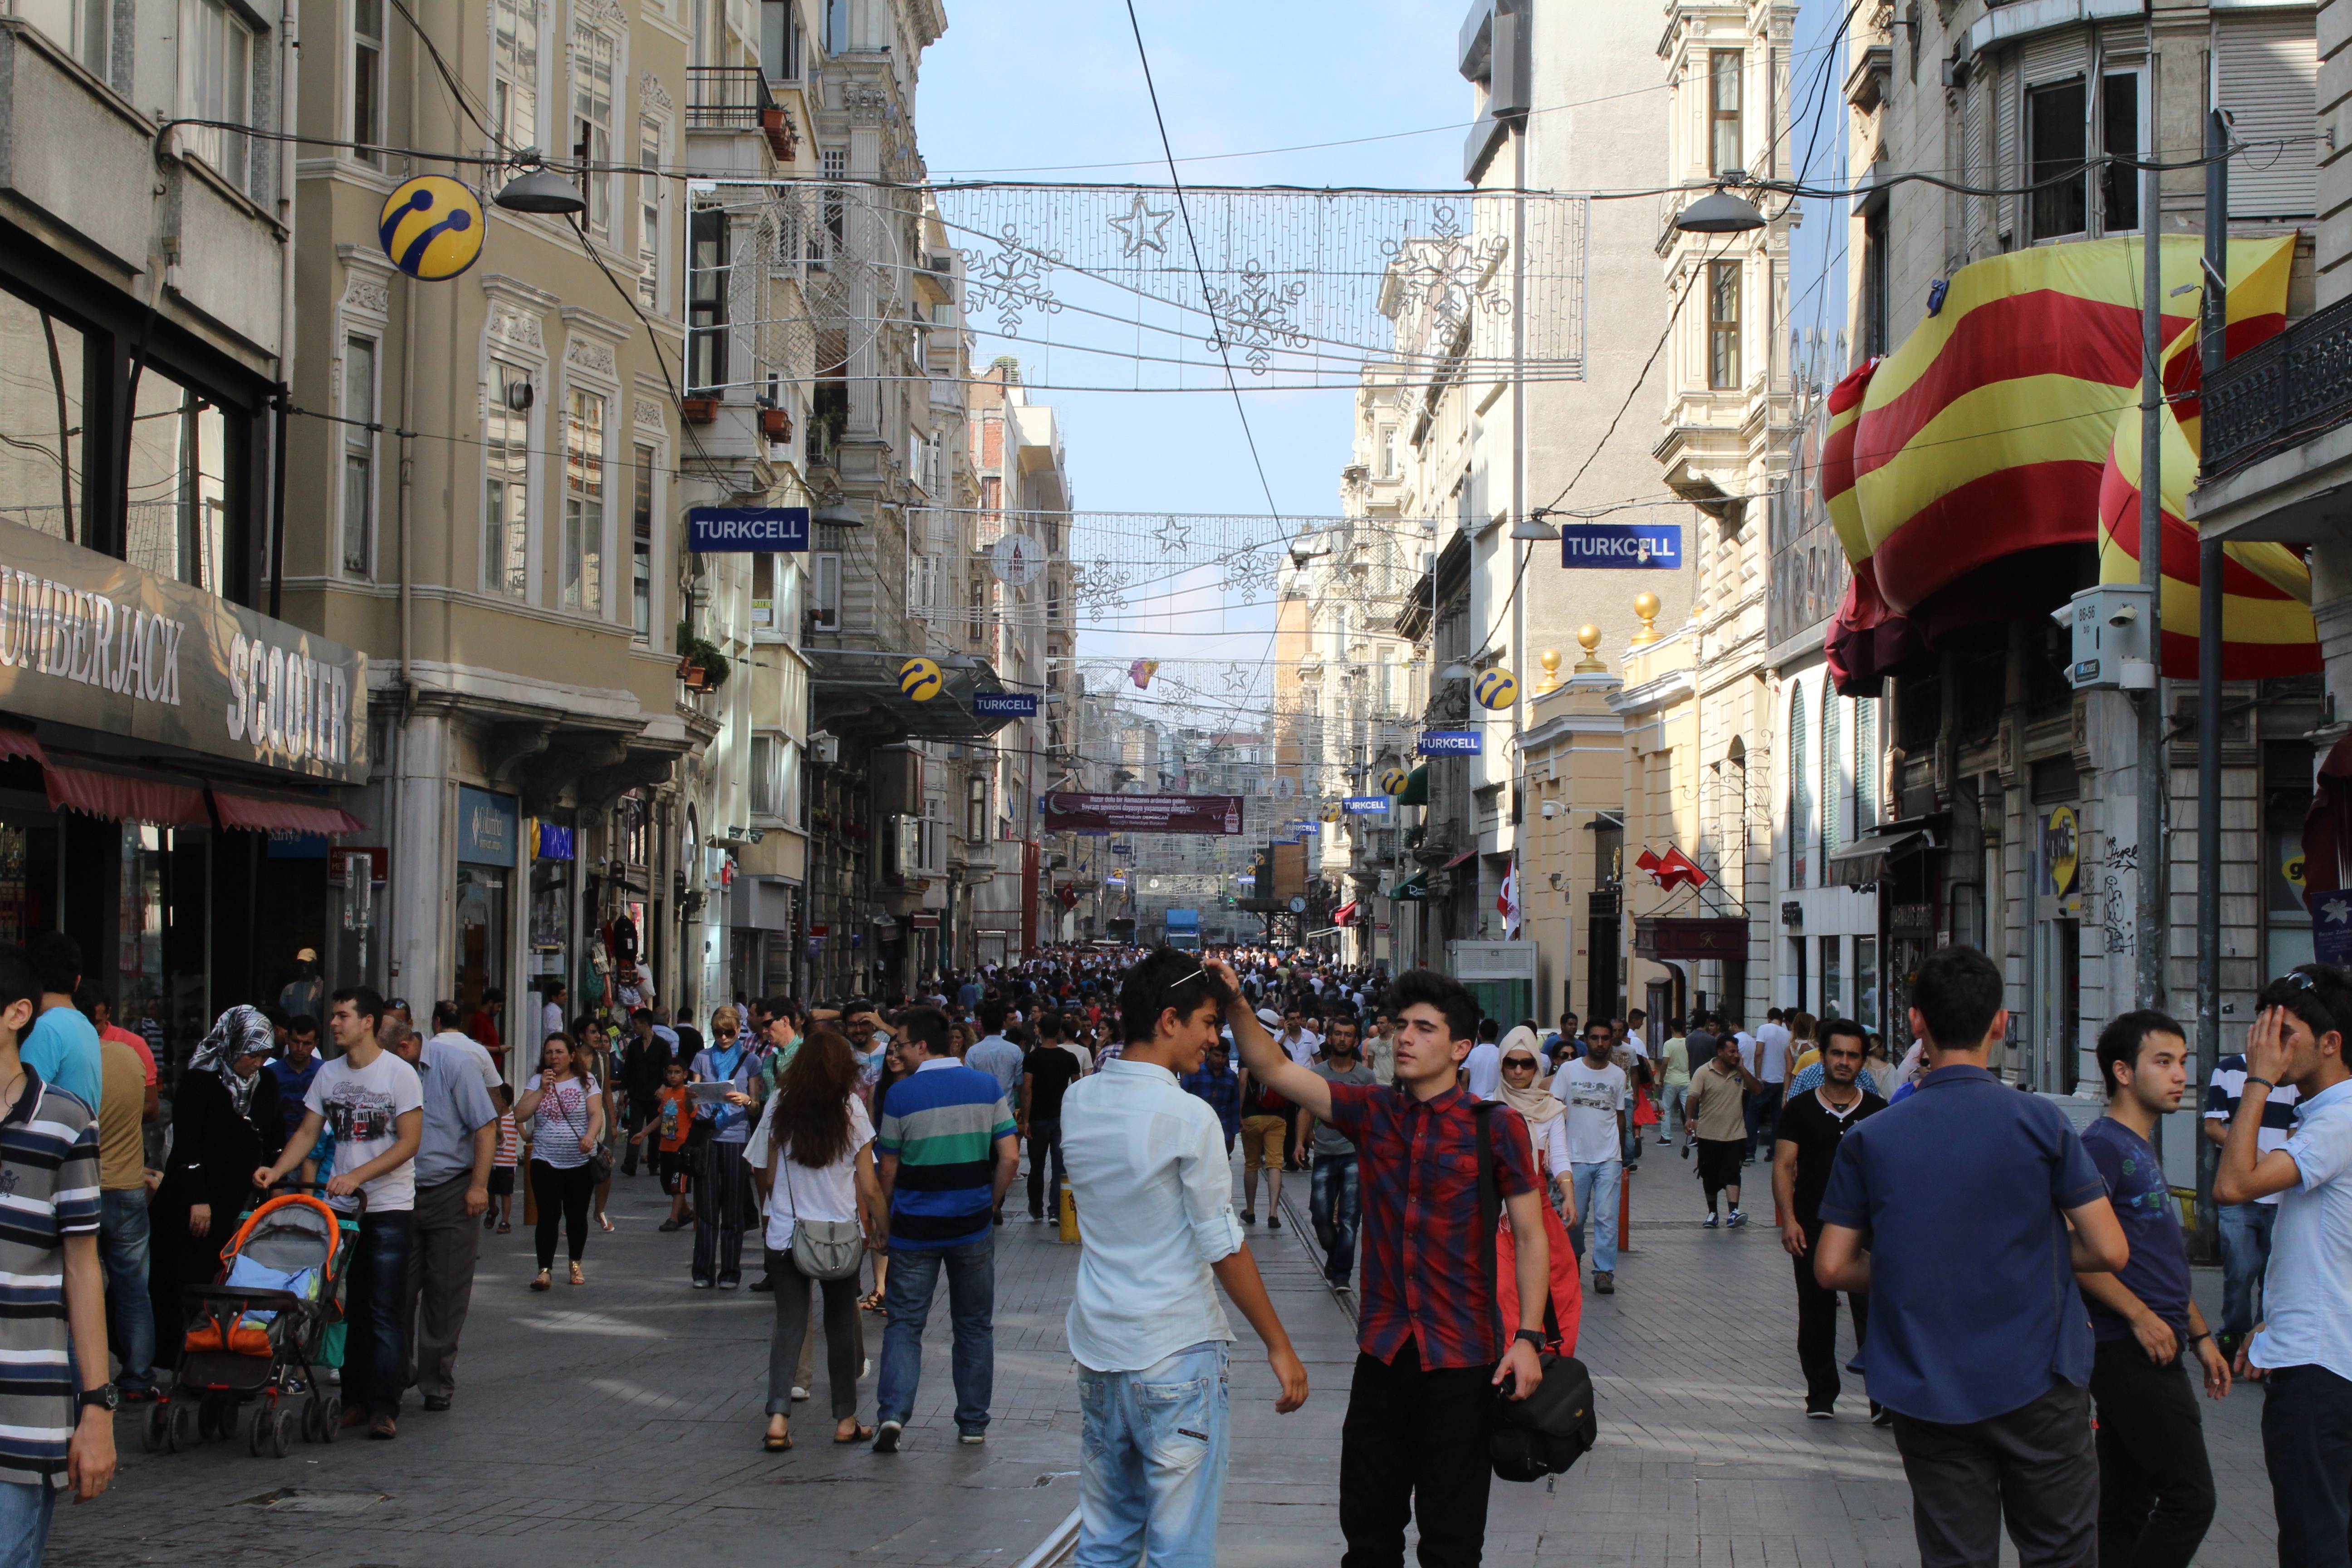 Таксимо район стамбула. Площадь Истикляль в Стамбуле. Таксим Турция Стамбул. Улица Таксим в Стамбуле. Пешеходная улица Стамбула Истикляль.